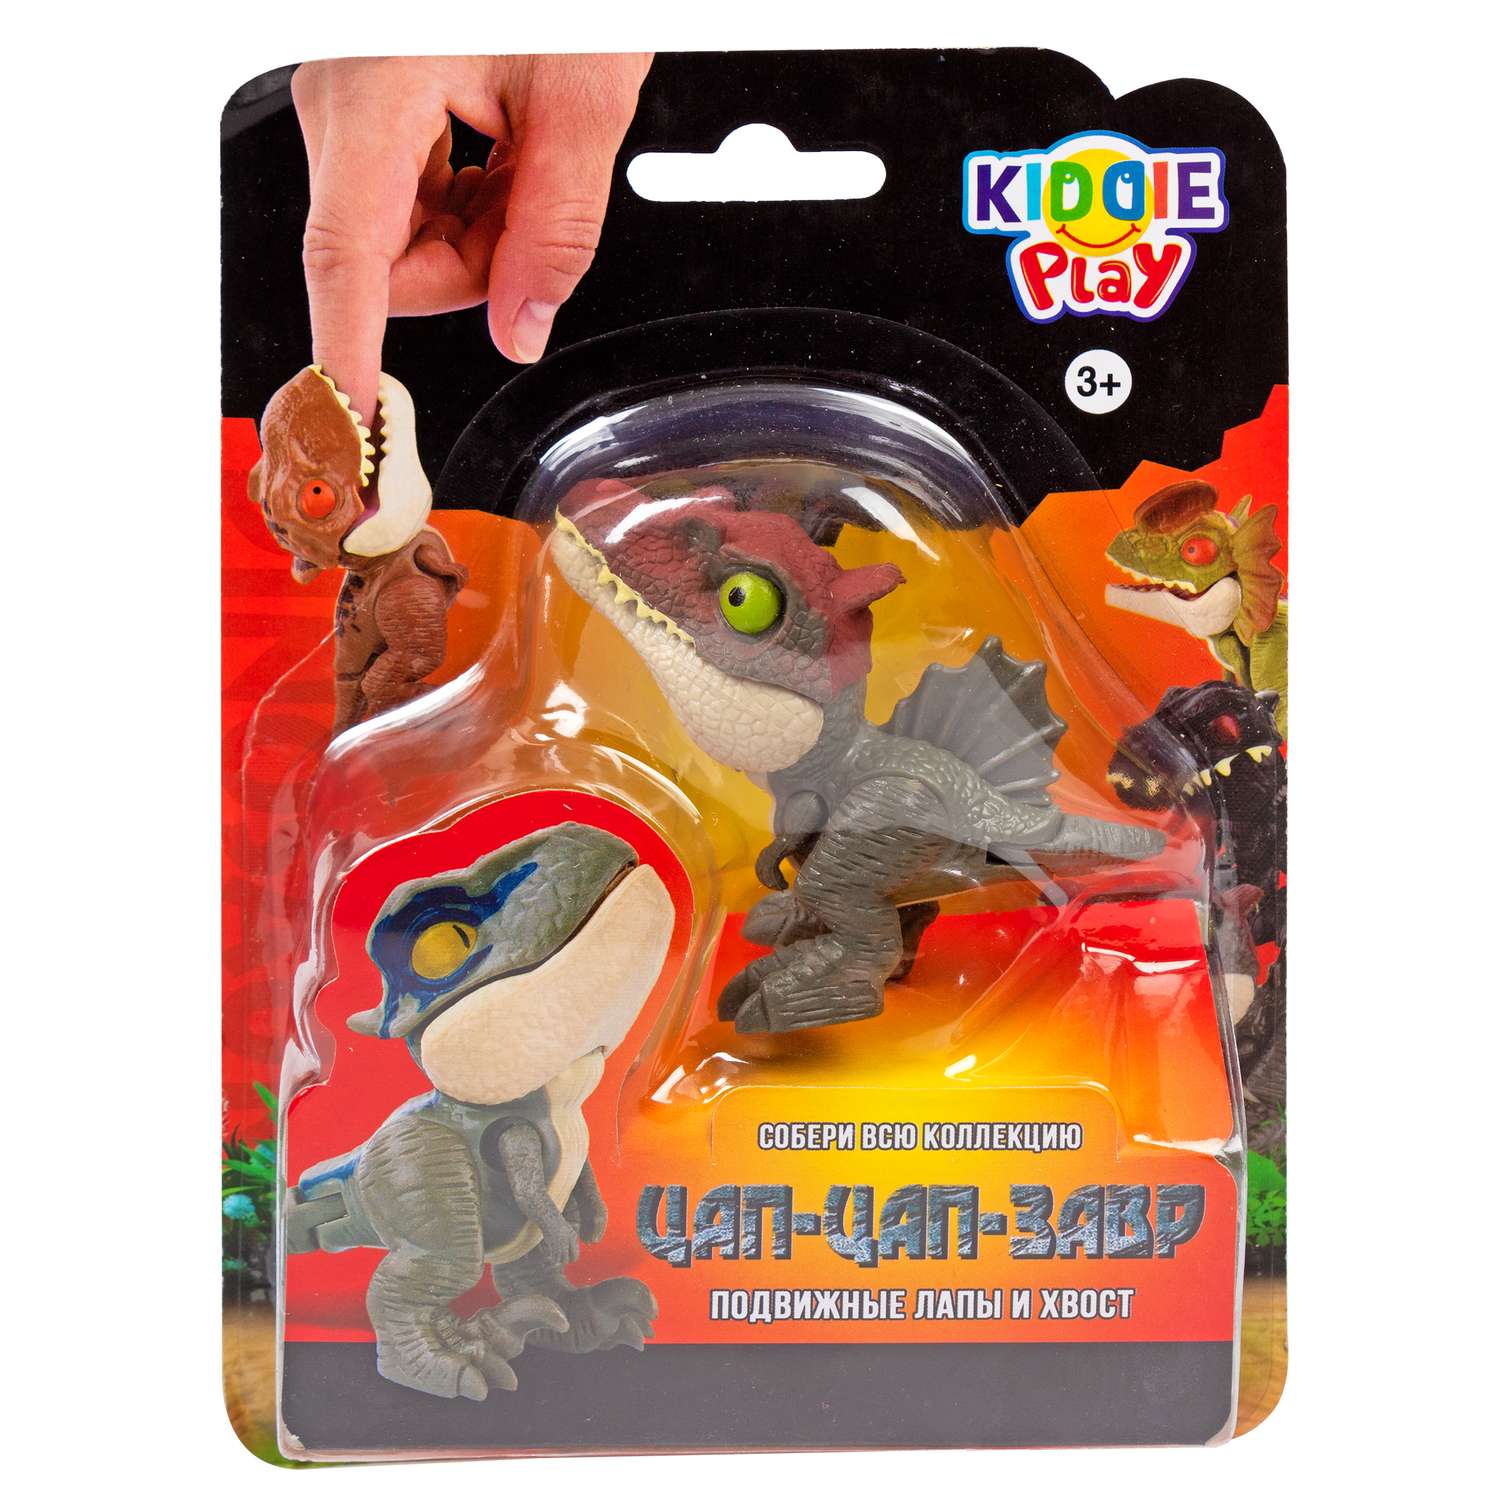 Игрушка KiddiePlay Динозавр Цап цап завр в ассортименте 12604 - фото 2